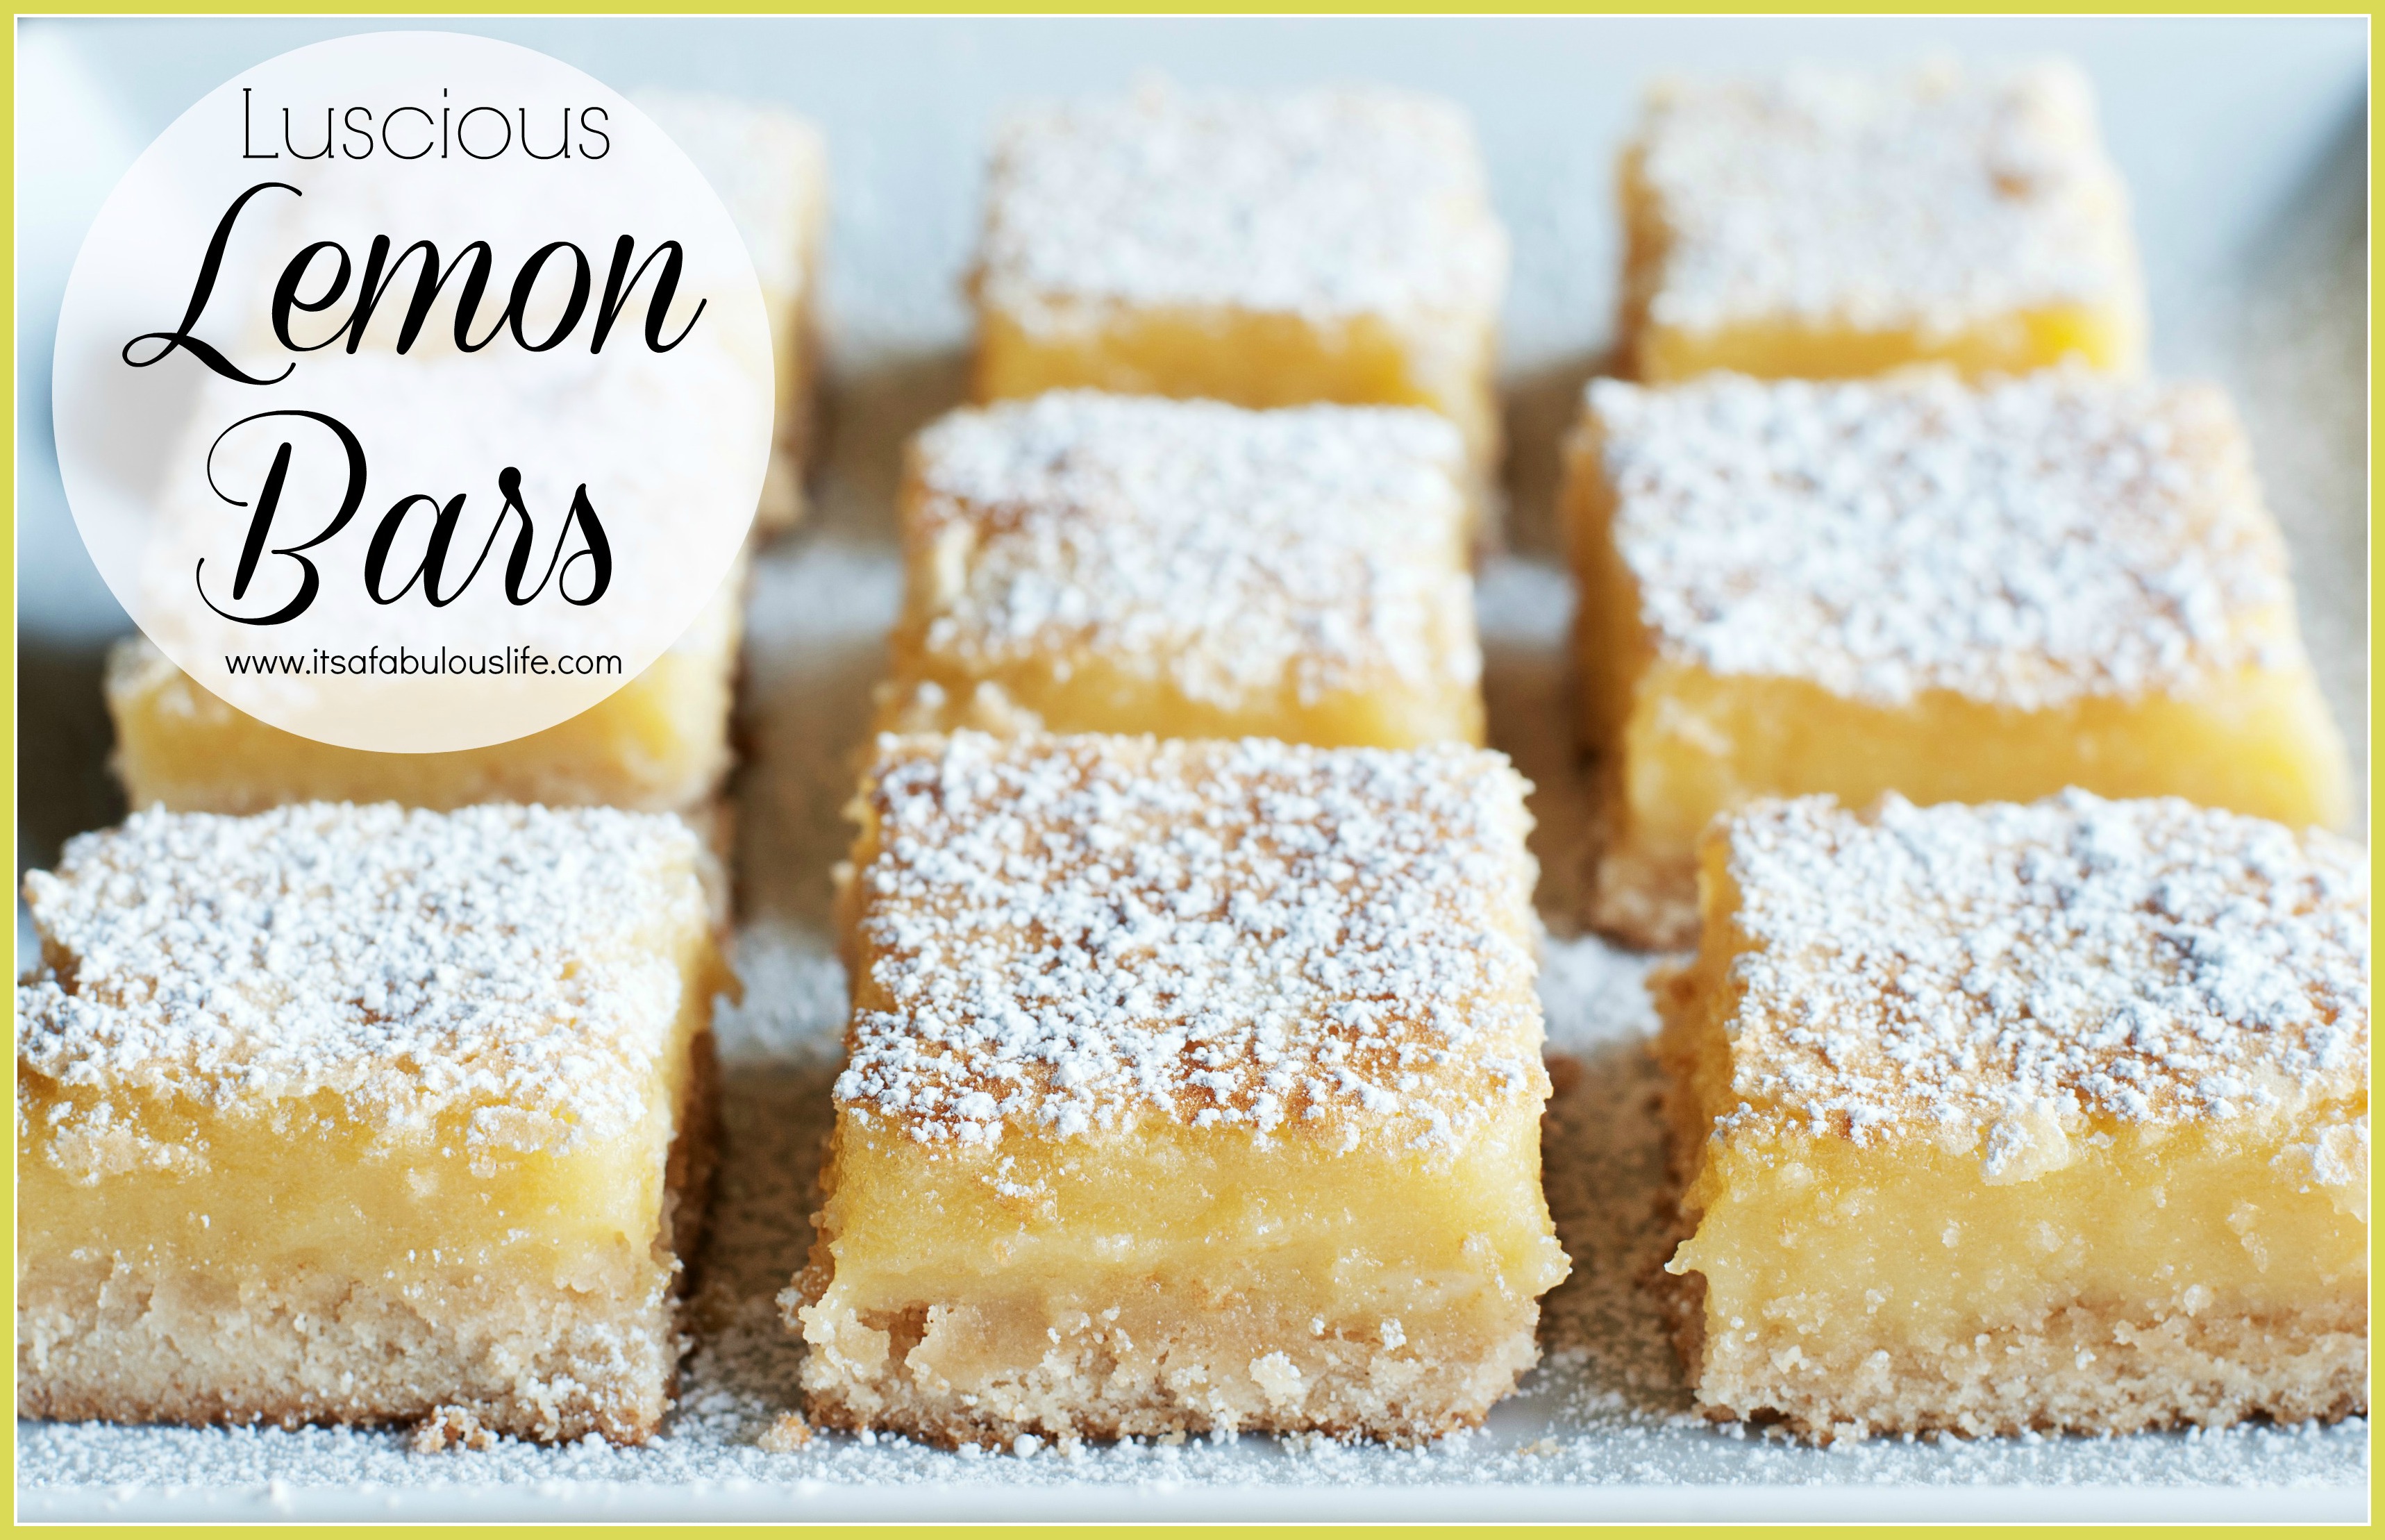 Luscious Lemon Bars – The Best Lemon Bar Recipe!